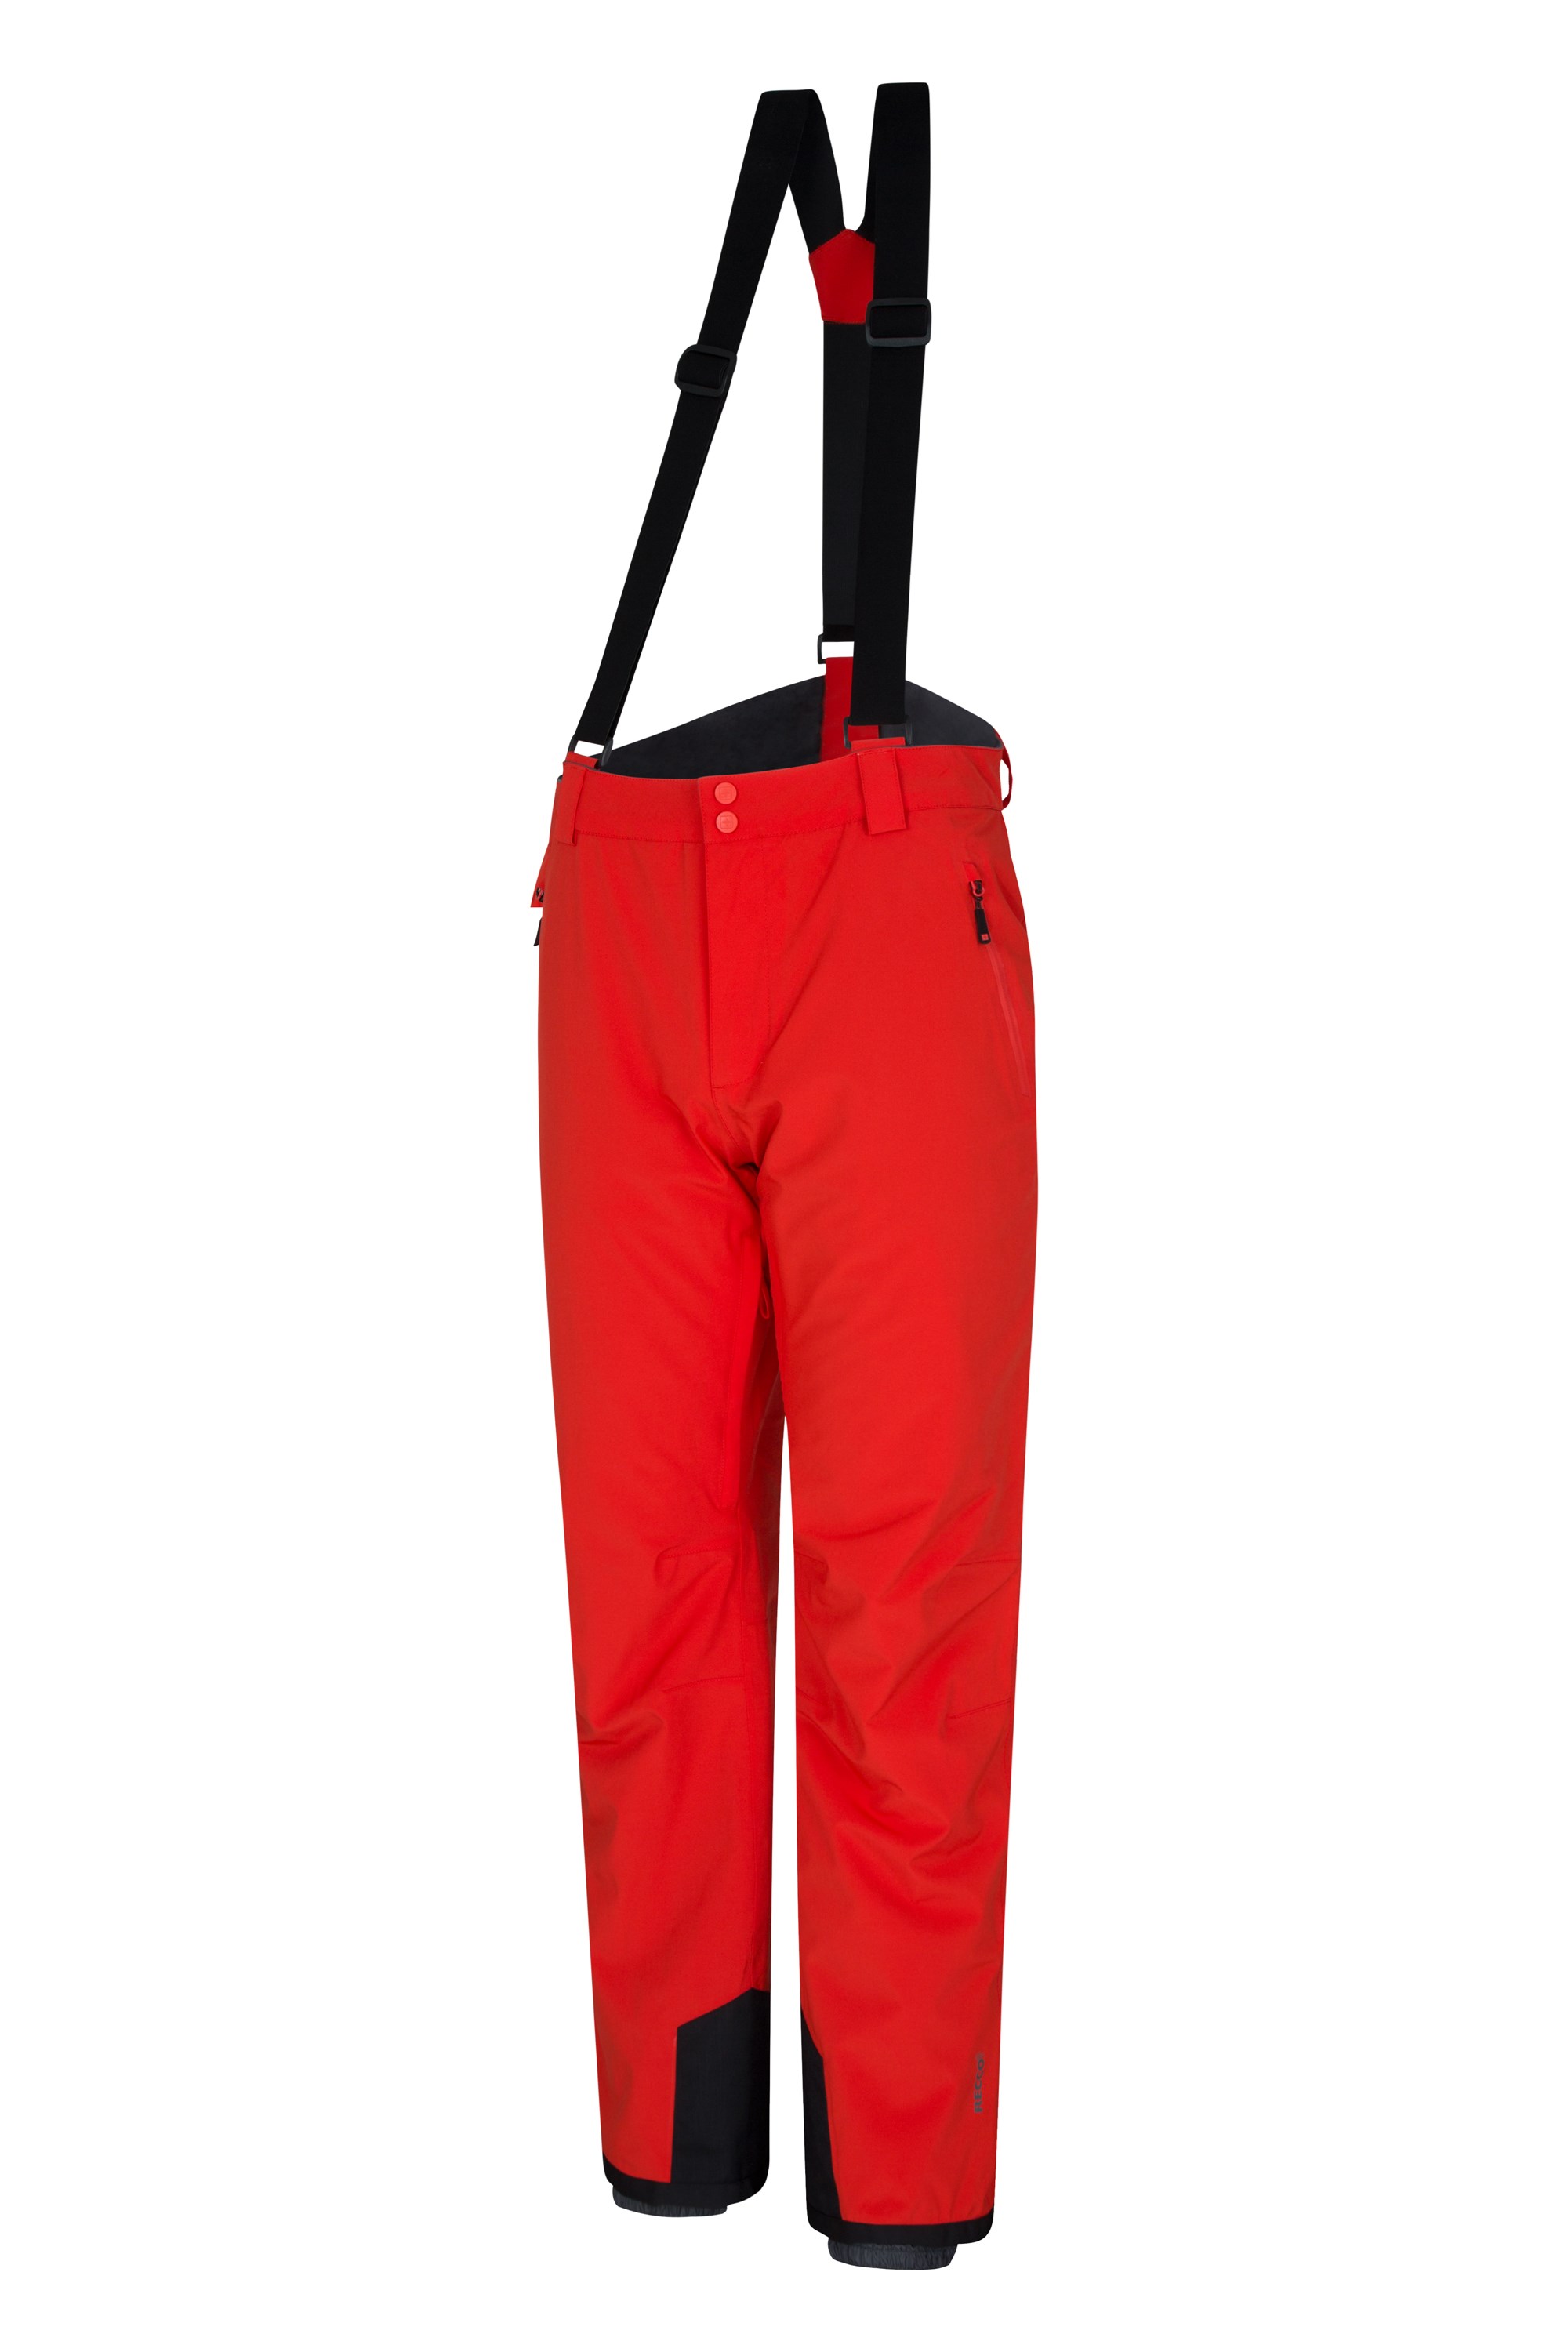 Oxbow Faria Pant Womens Ivory Snowboarding Ski Trousers Salopettes EU 40  UK 12  eBay